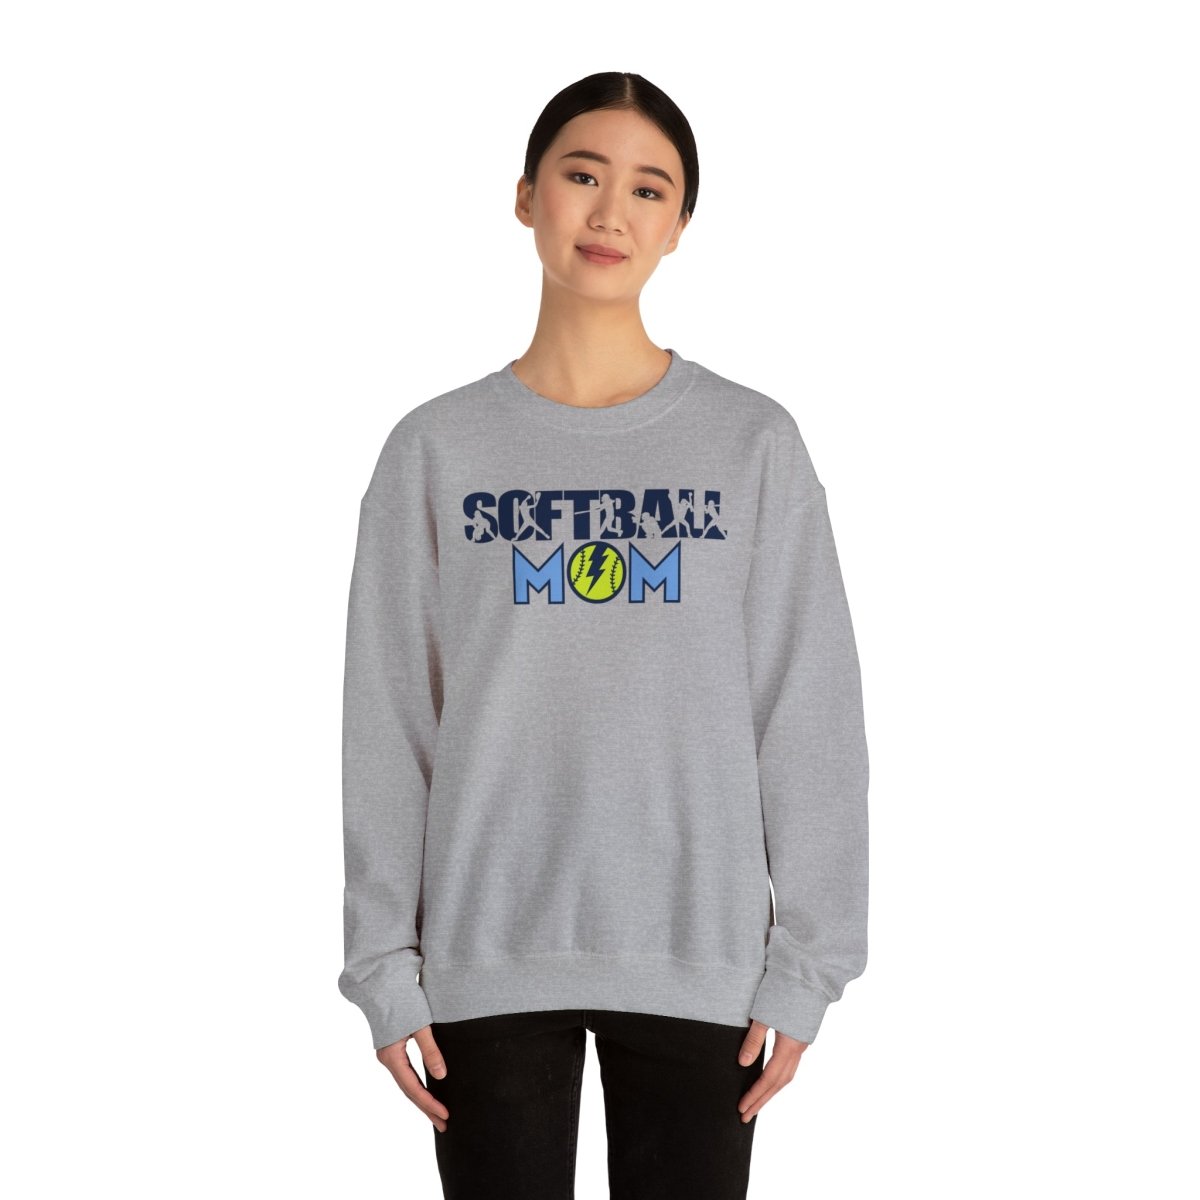 Softball Mom Storm Cotton Sweatshirt